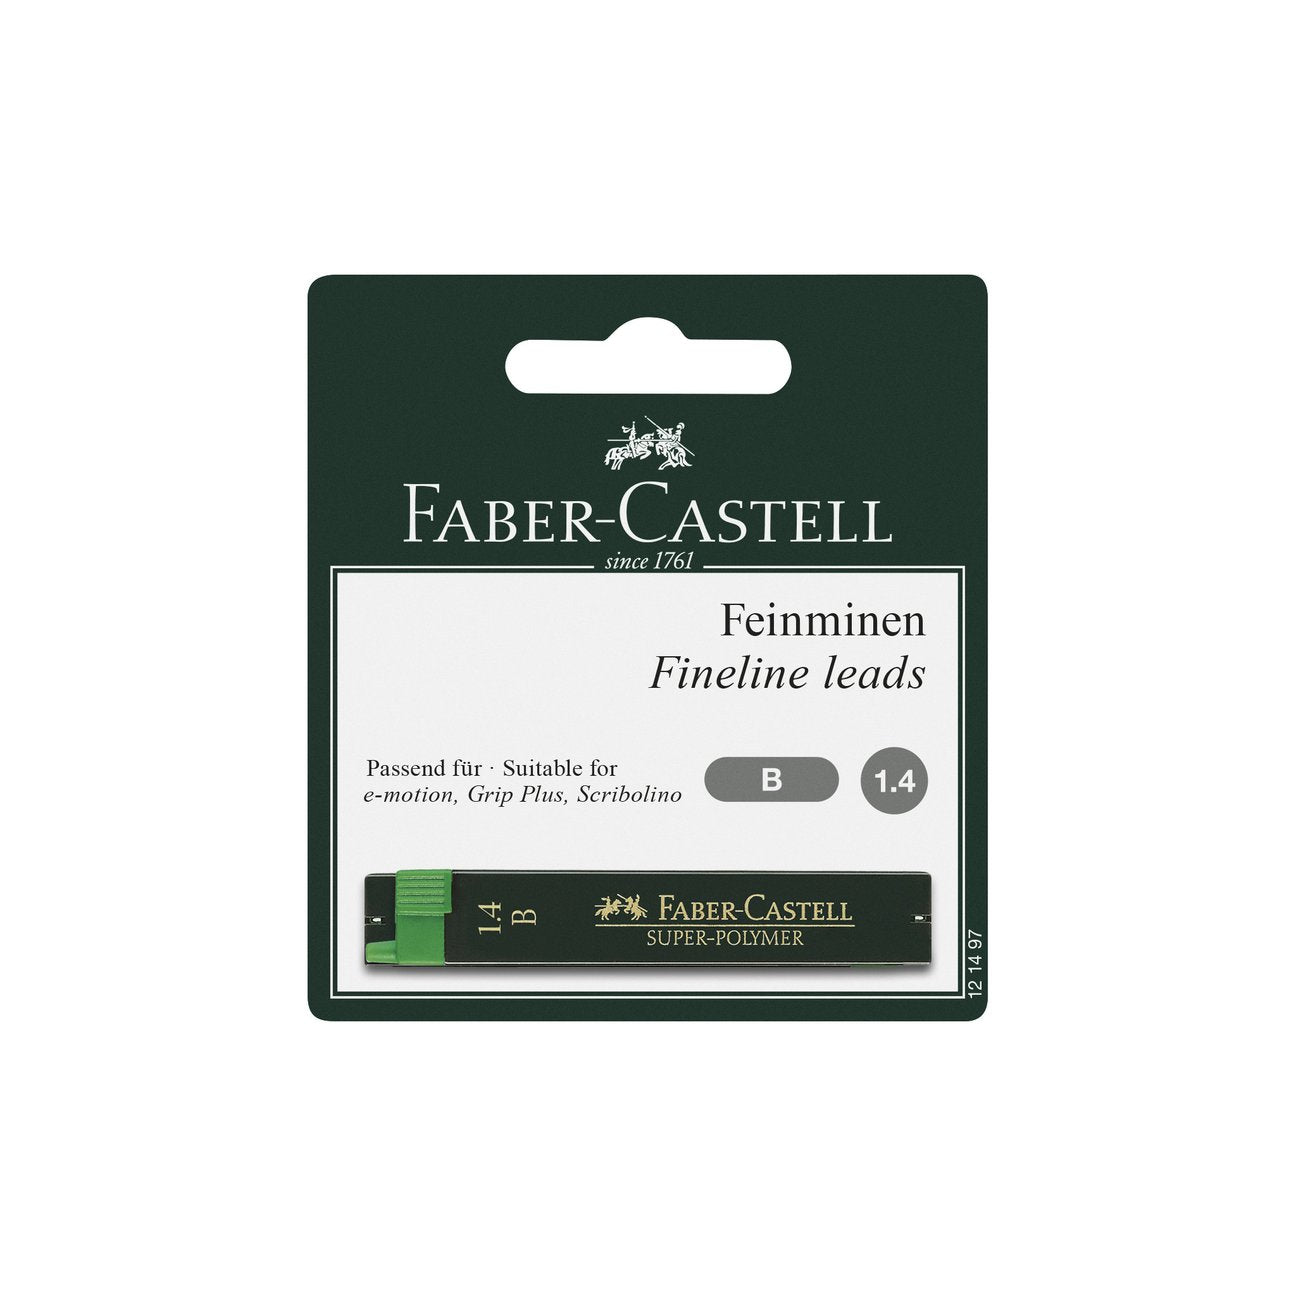 Faber-Castell Super-Polymer Lead B, 1.4mm